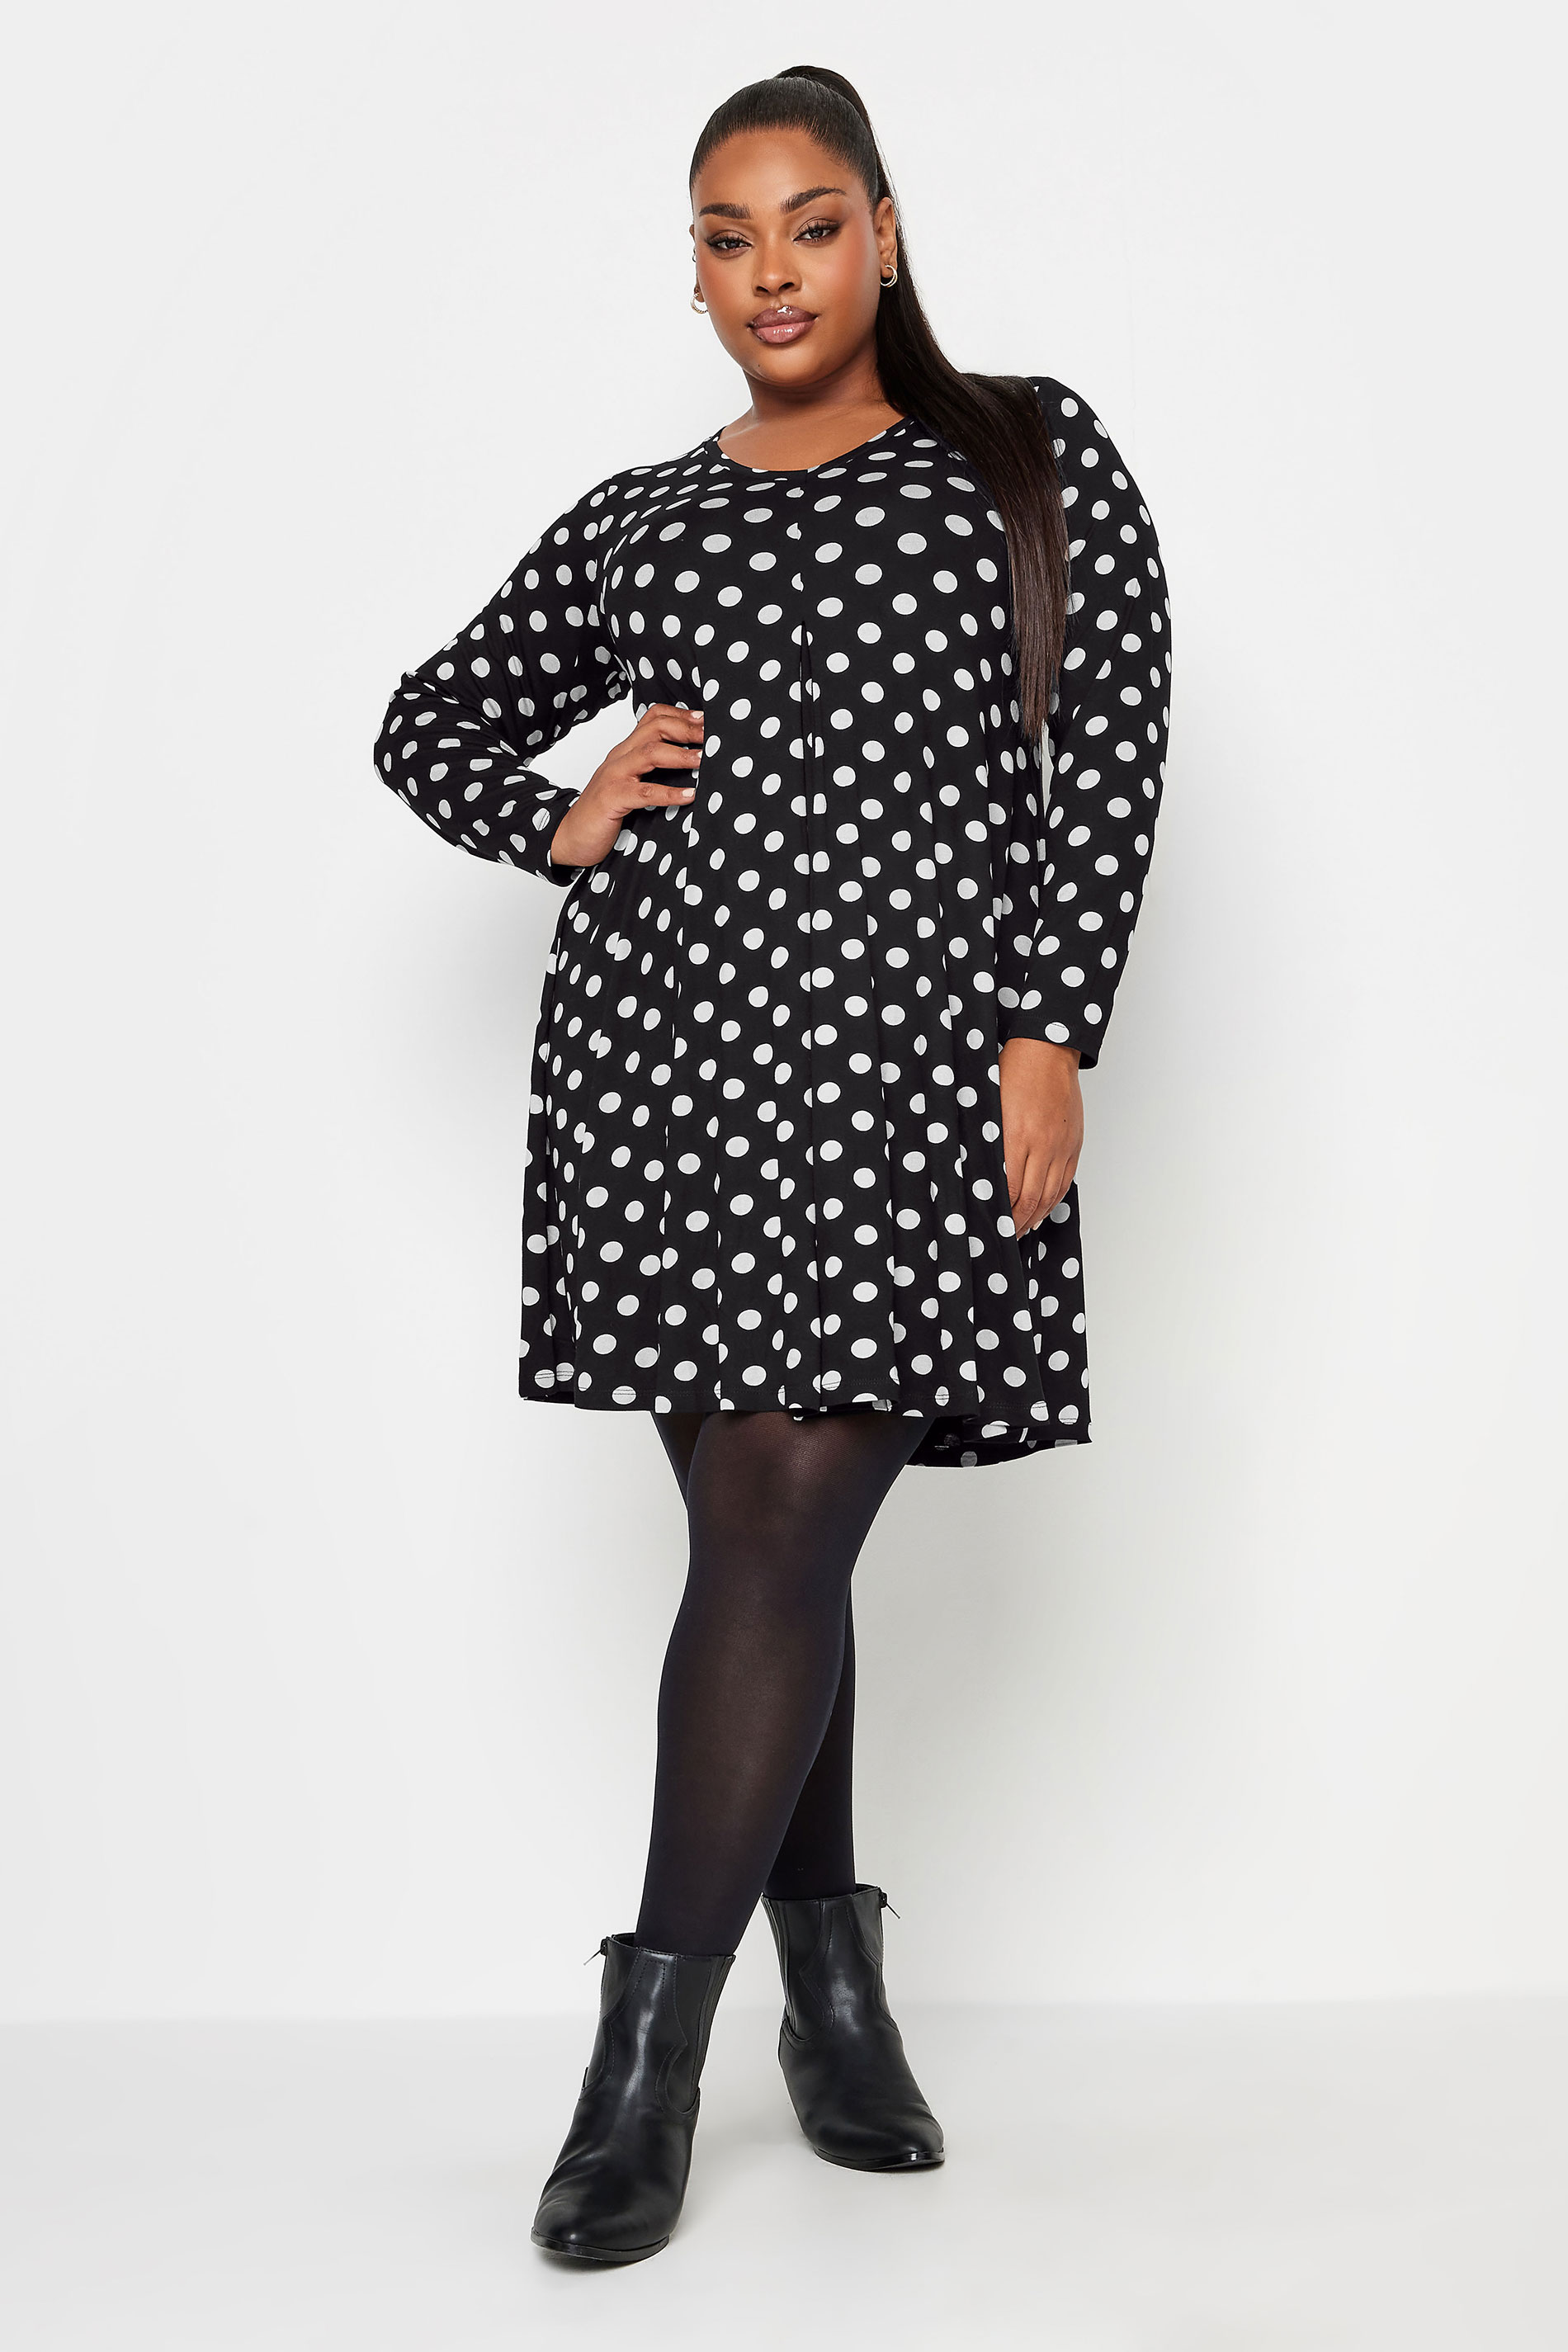 YOURS Plus Size Black Polka Dot Print Swing Mini Dress | Yours Clothing 1